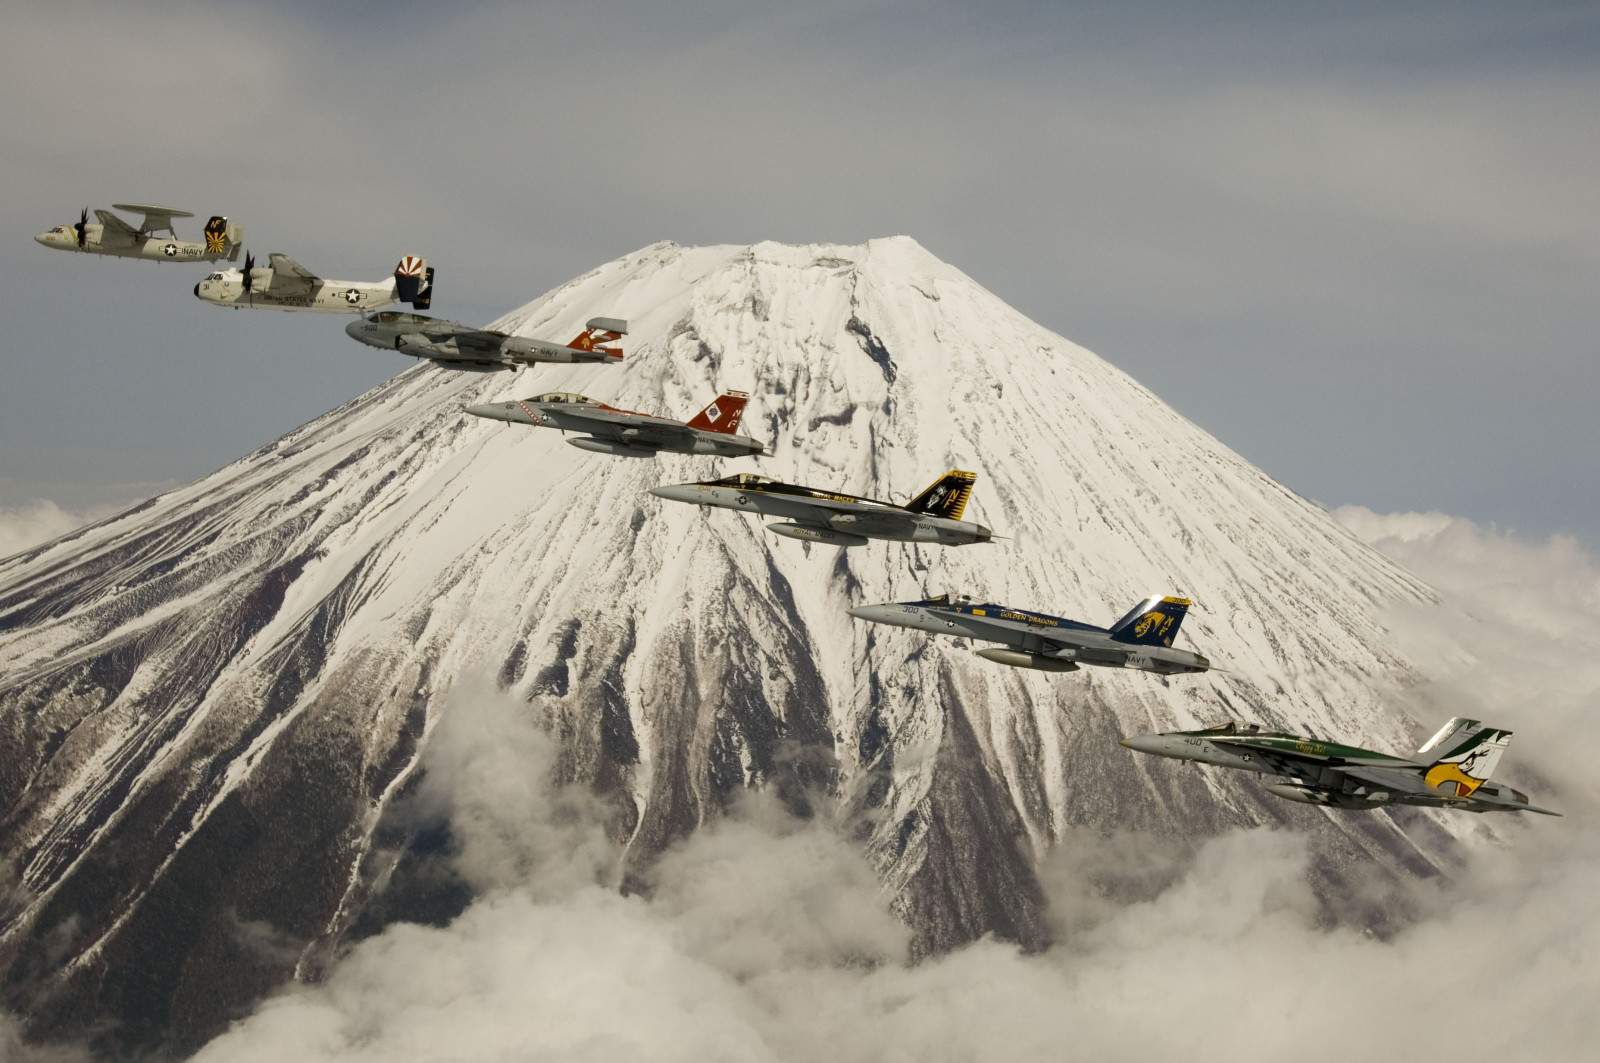 Gunung, penerbangan, Gunung berapi, penerbangan, Fuji, Pejuang